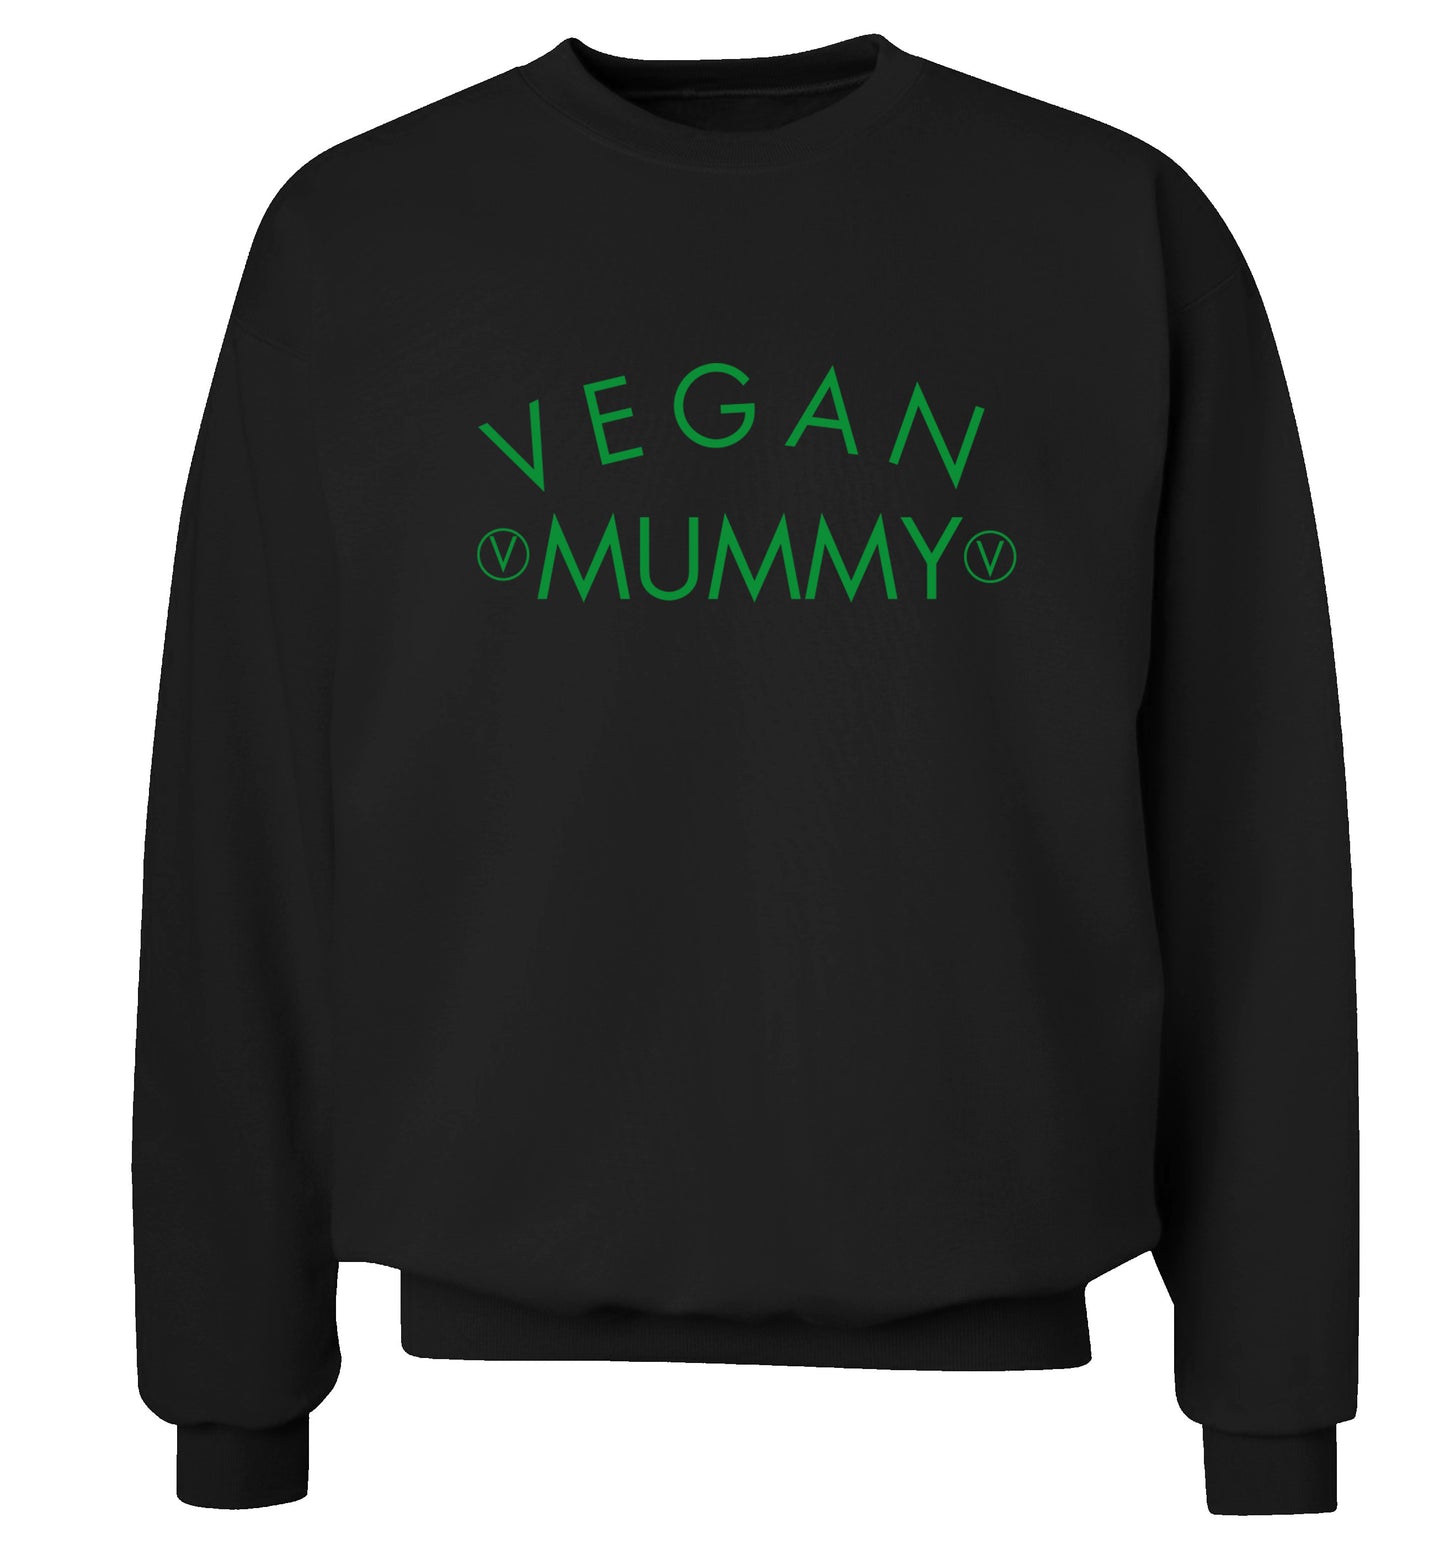 Vegan mummy Adult's unisex black Sweater 2XL